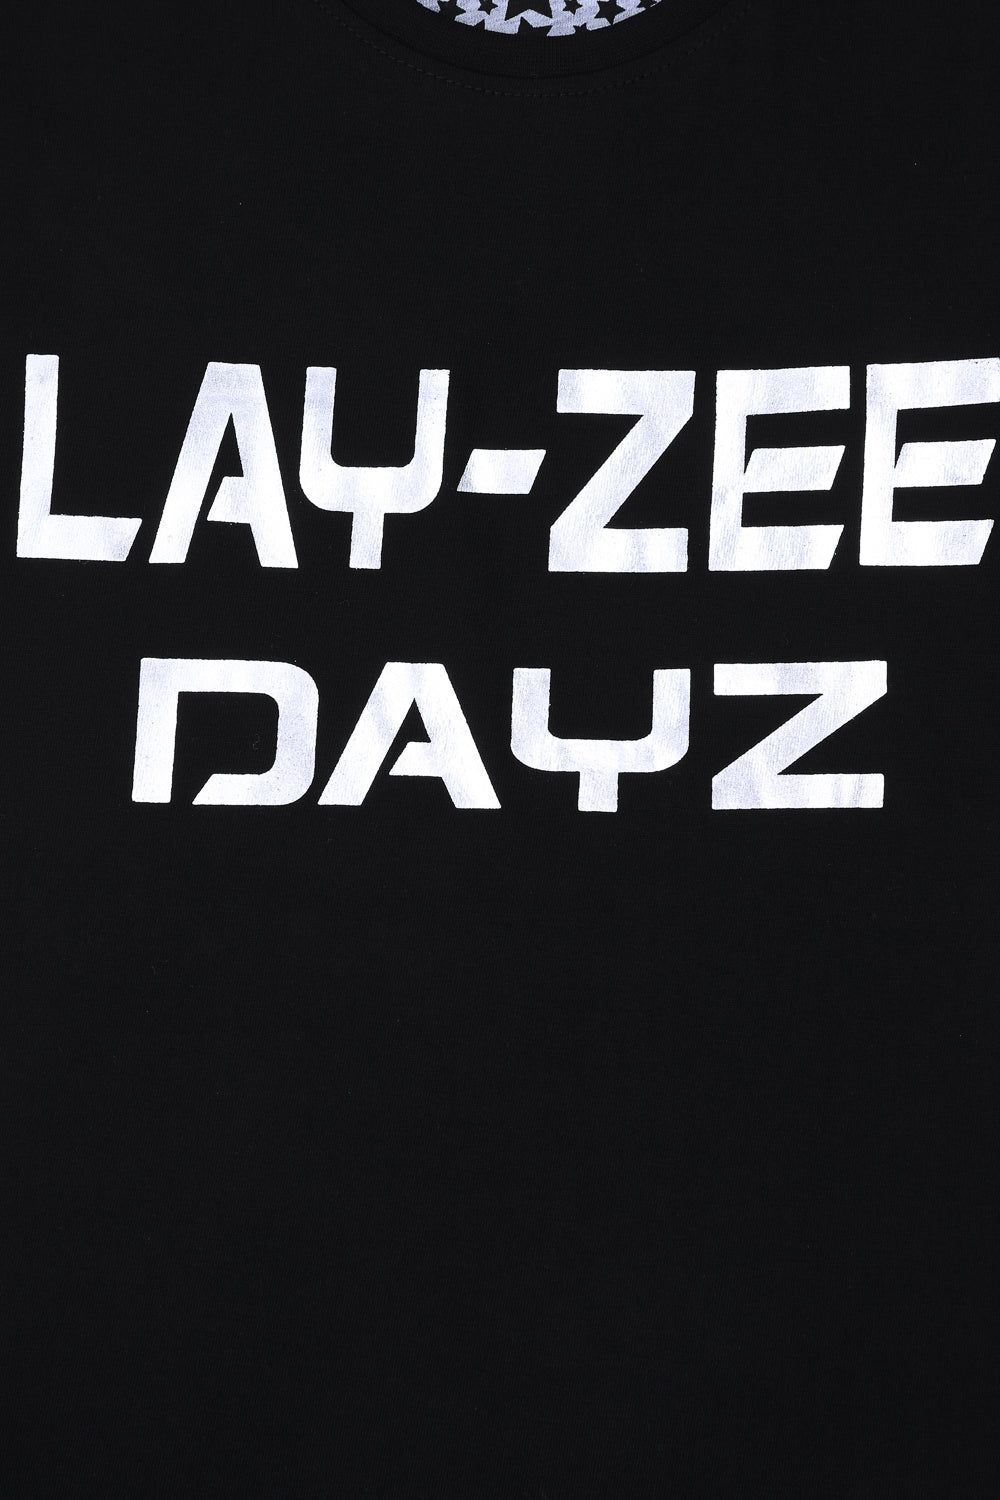 Girls Lay-zee Dayz Short Pyjamas - Pyjamas.com